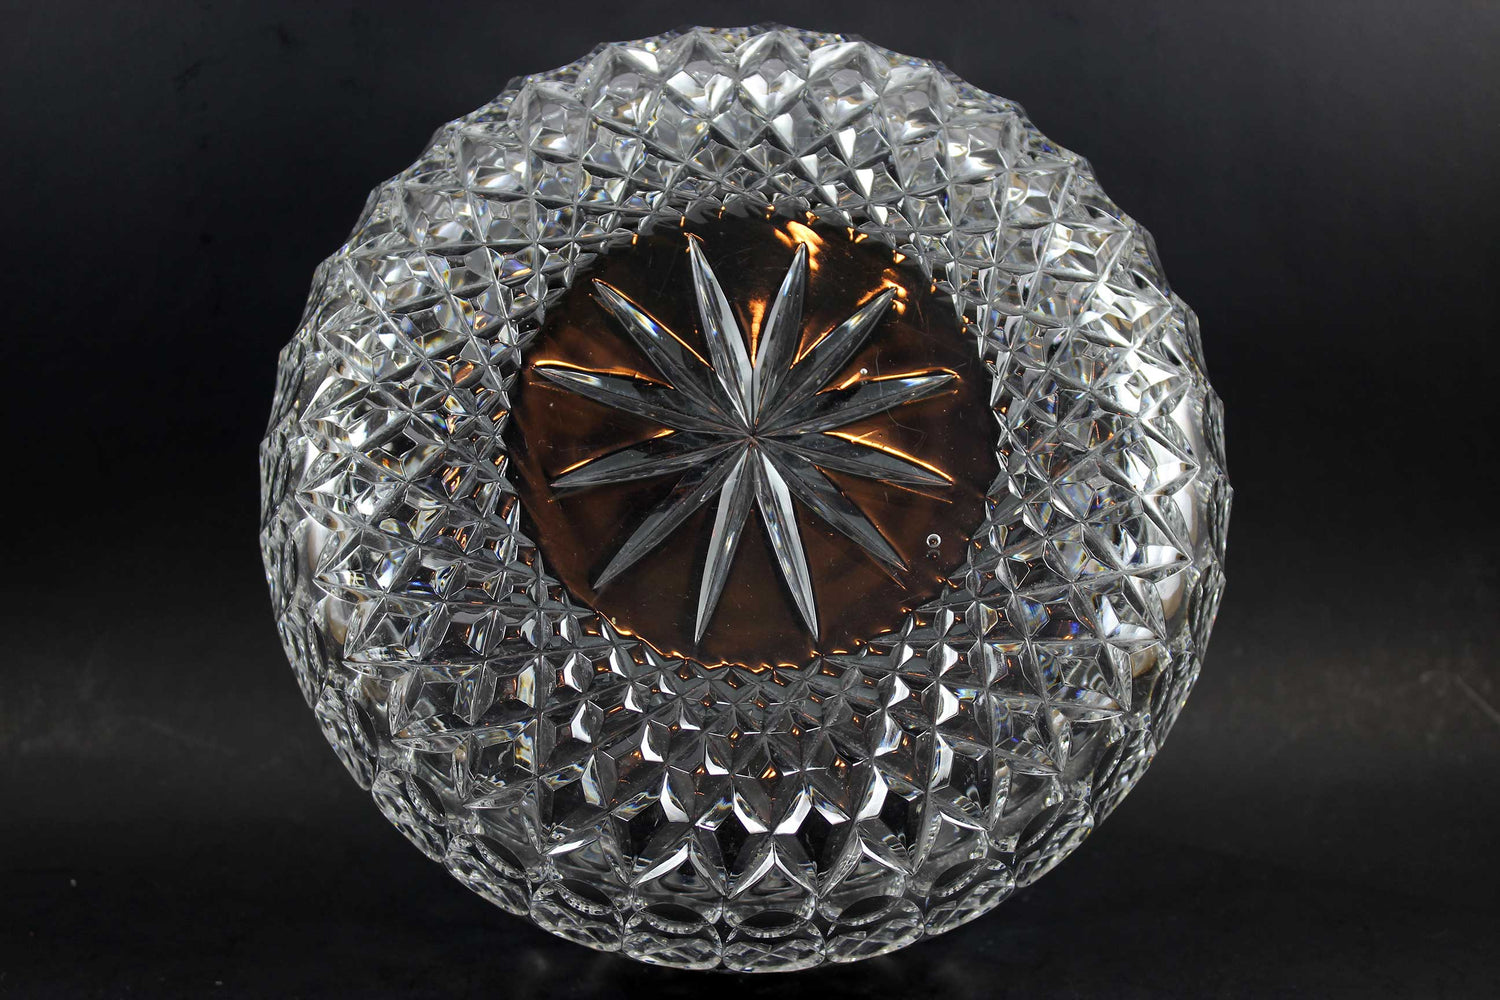 Diamond Cut Crystal Bowl 1